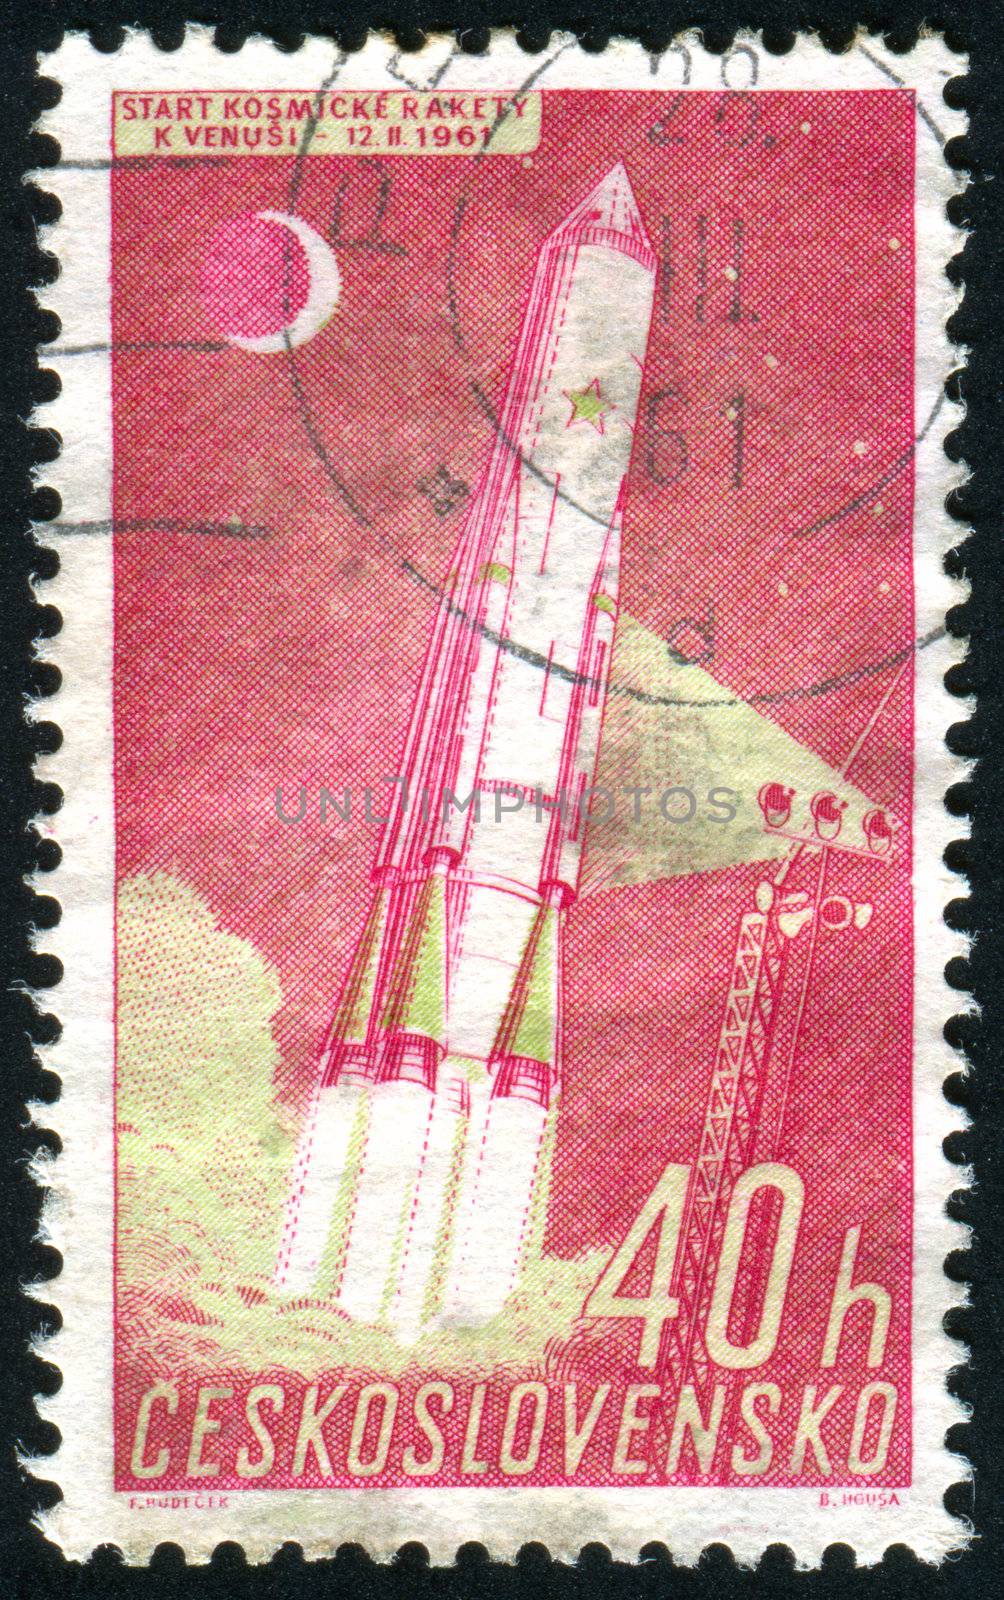 CZECHOSLOVAKIA - CIRCA 1961: stamp printed by Czechoslovakia, shows rocket, circa 1961